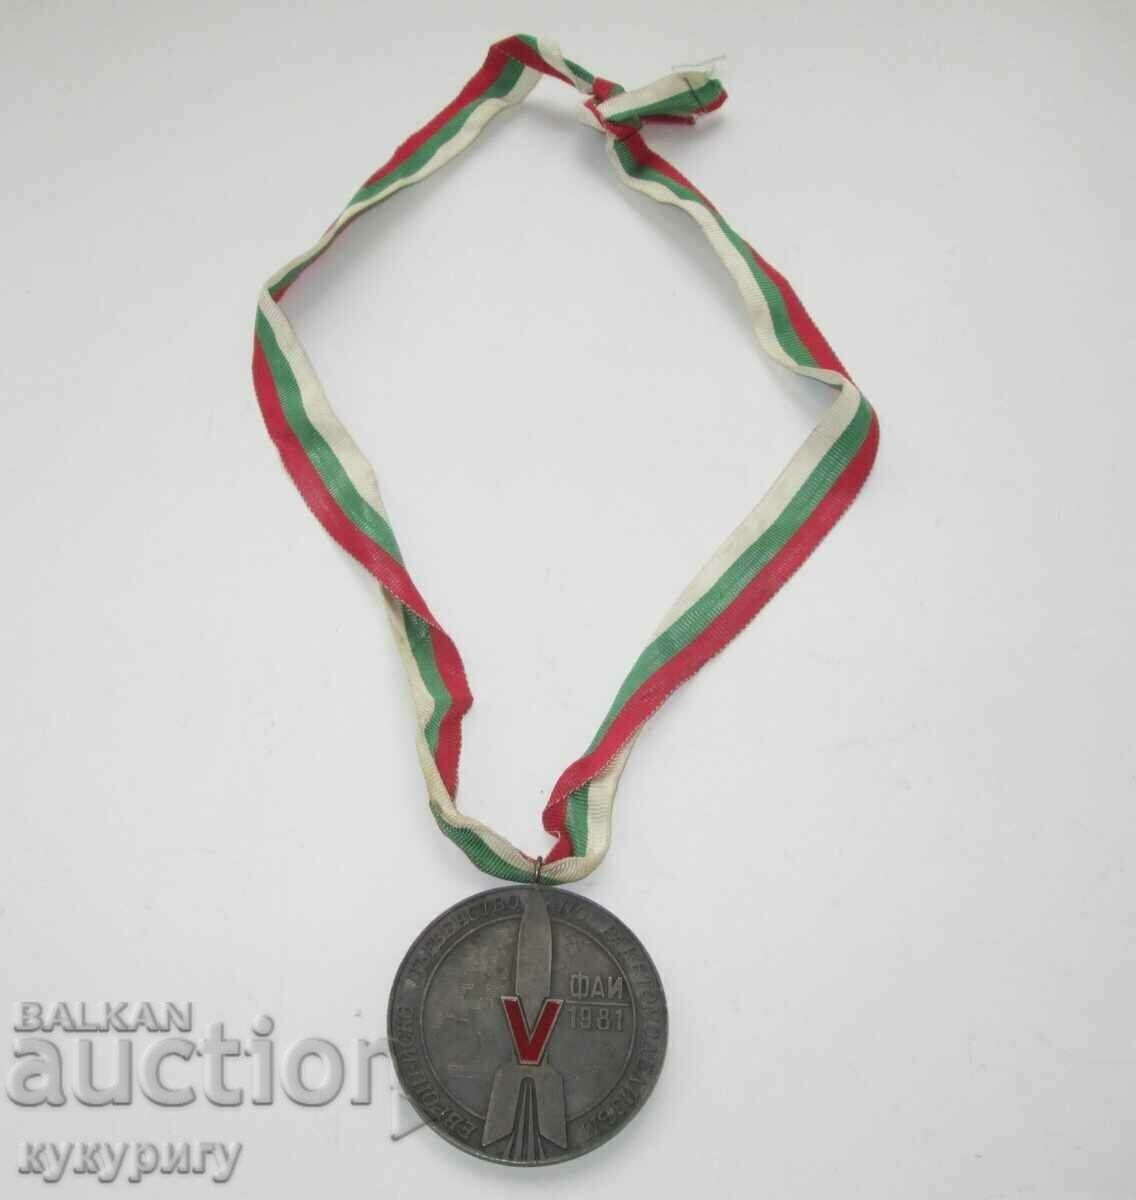 Old FAI European Model Rocket Championship medal